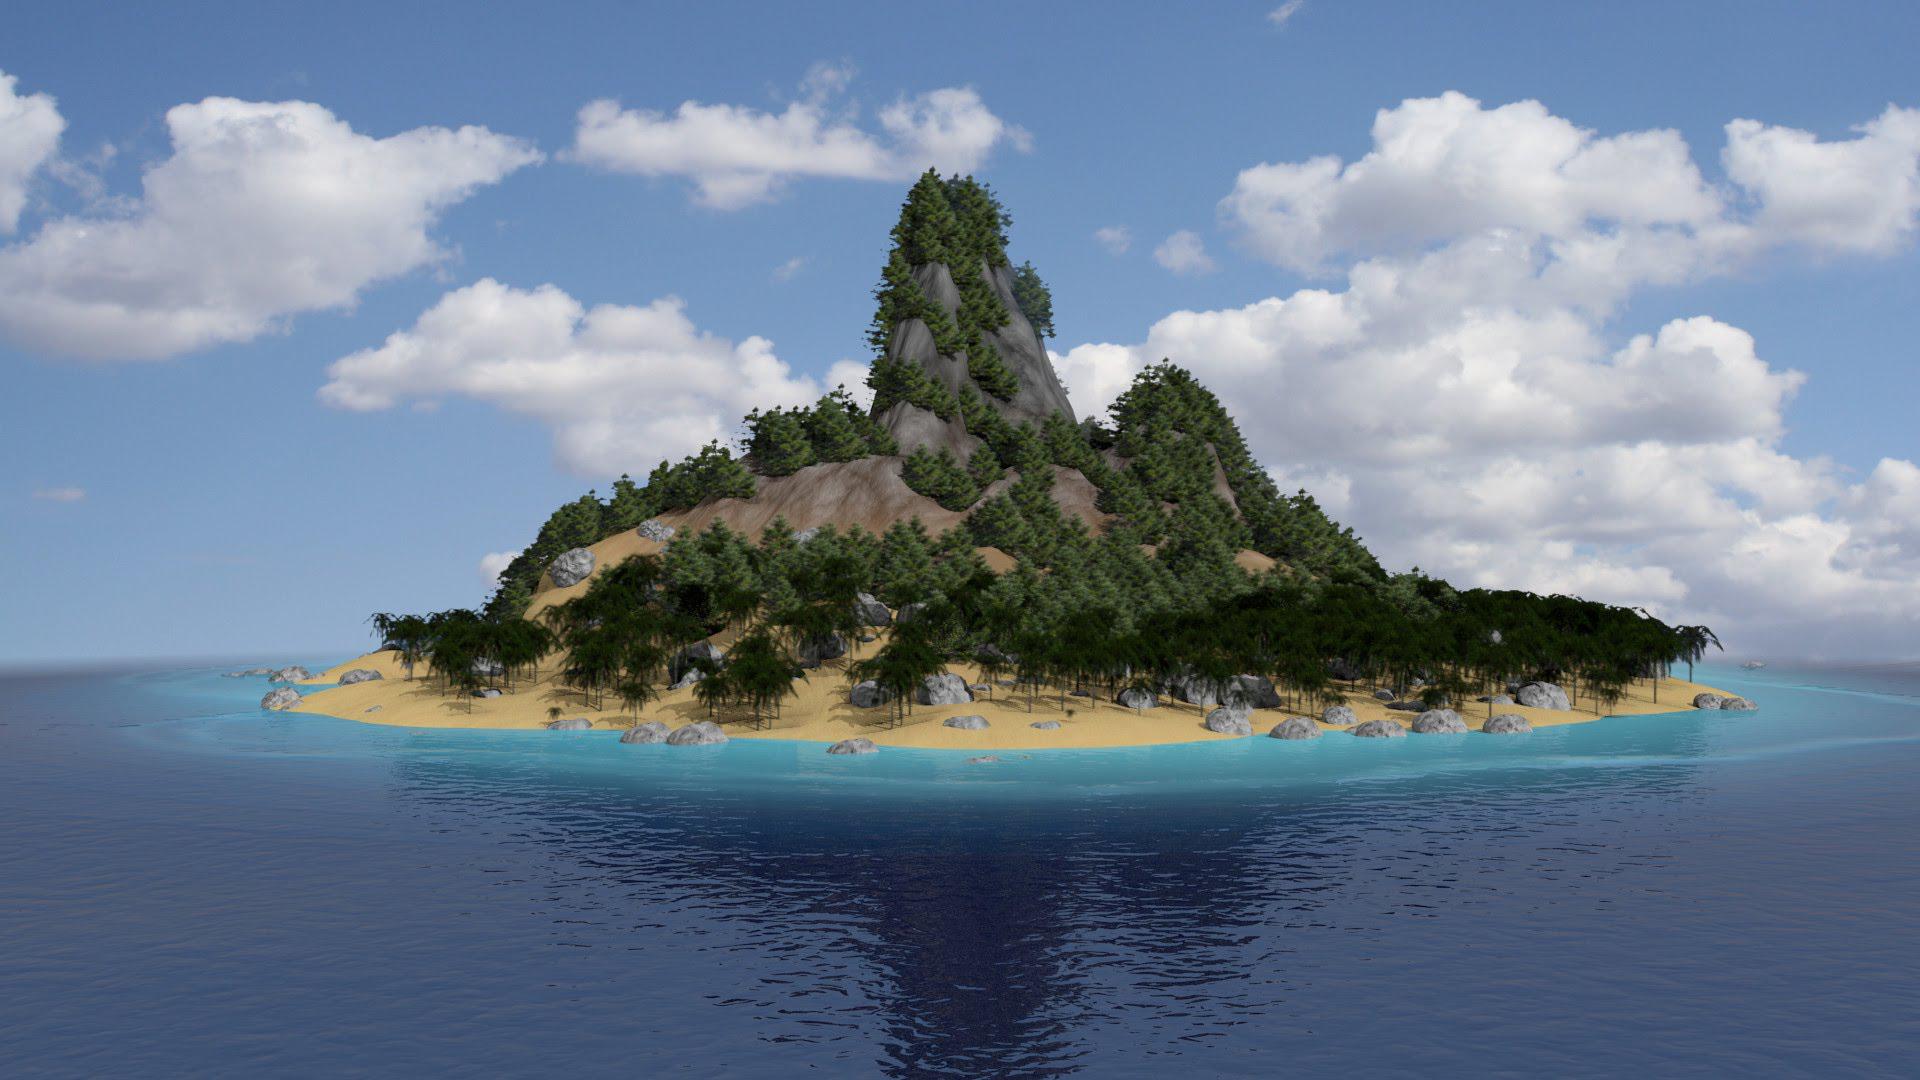 Background 18.6 Kb, Desert island